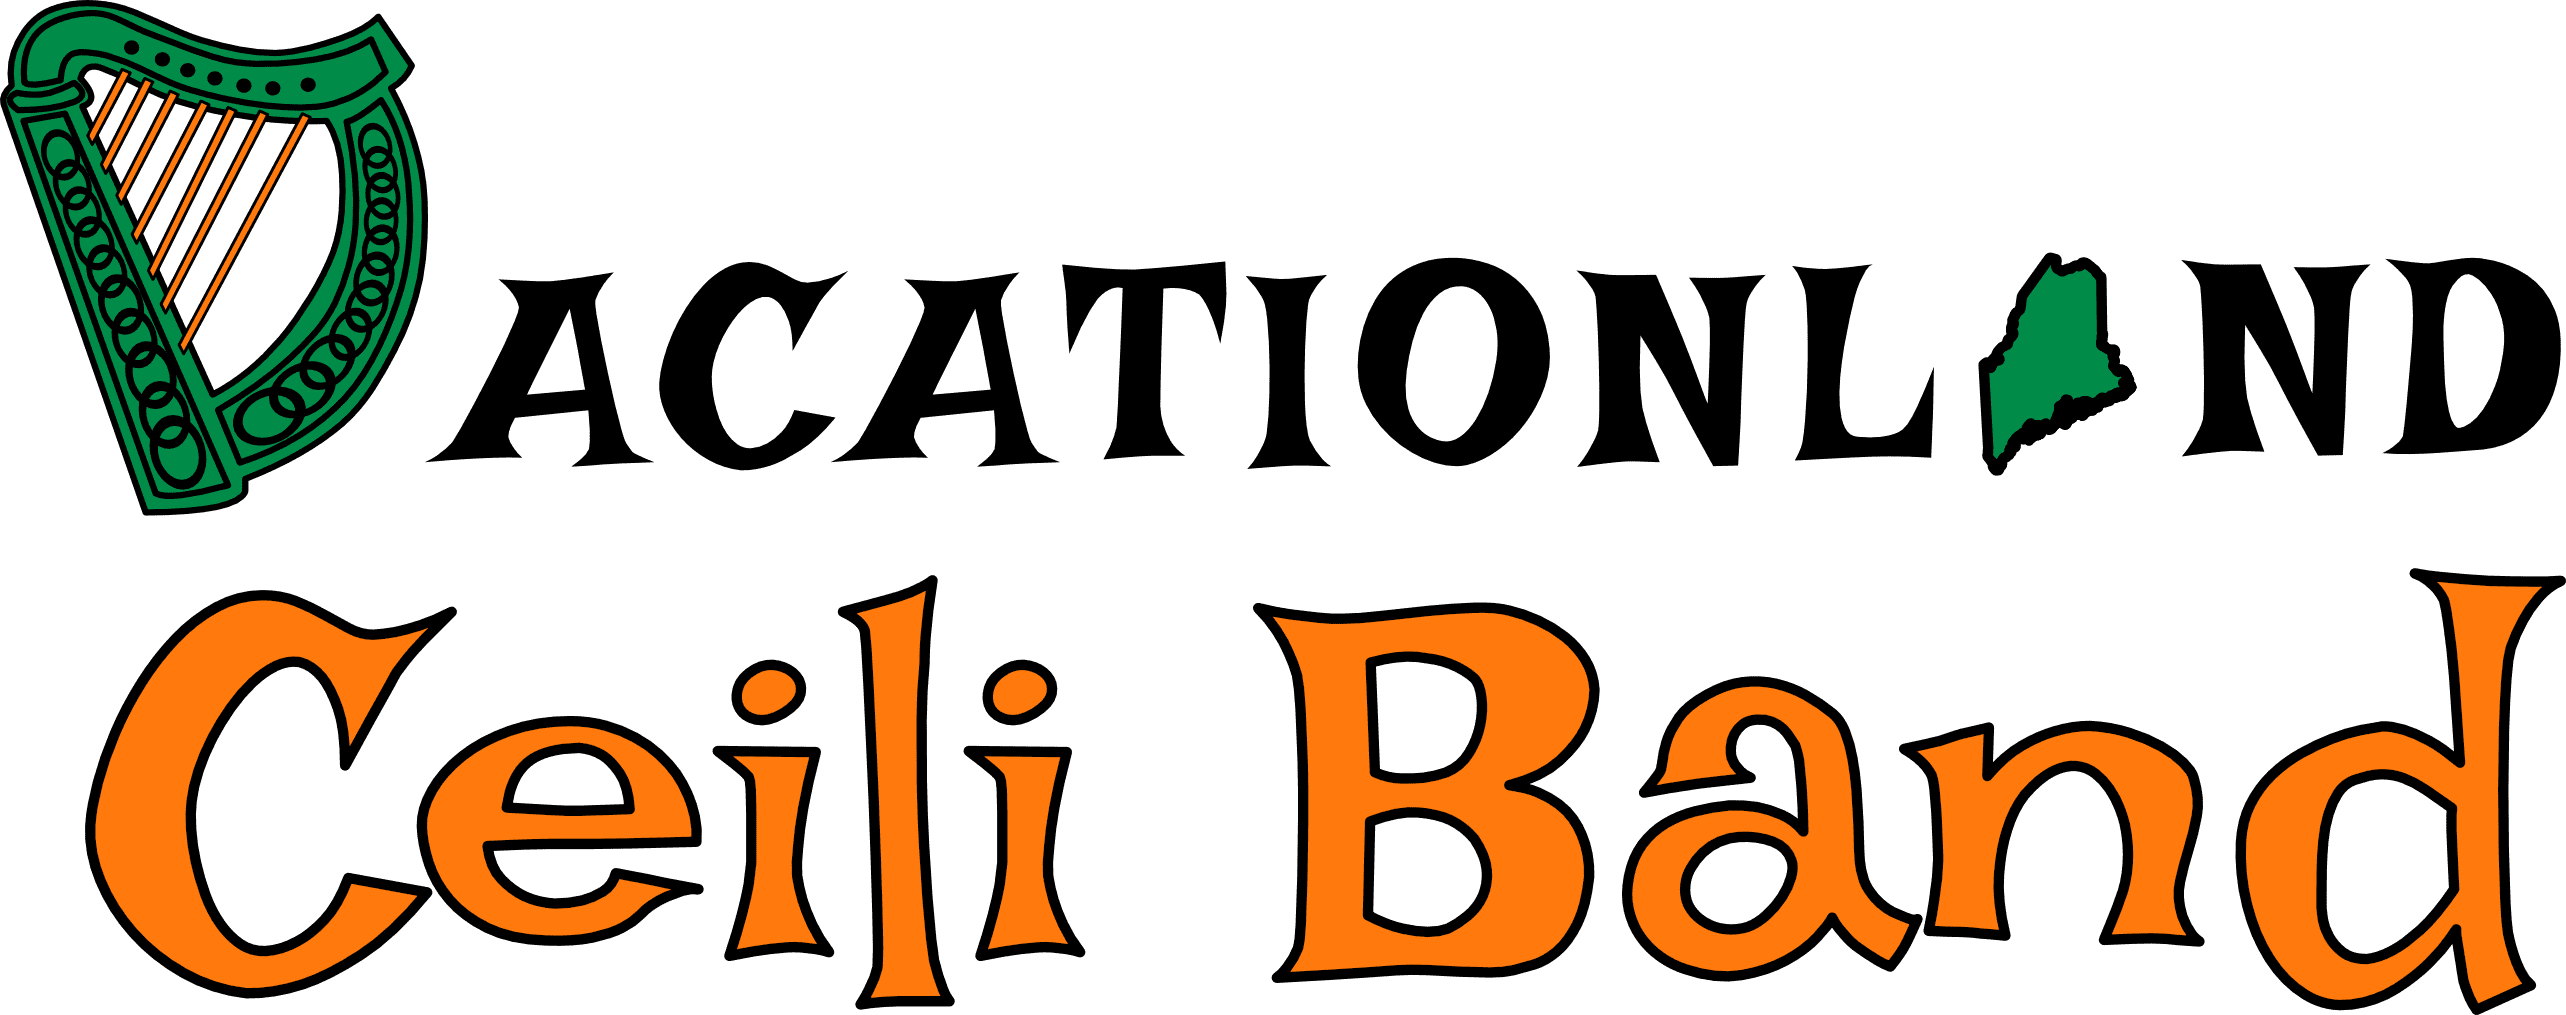 Vacationland Ceili Band logo